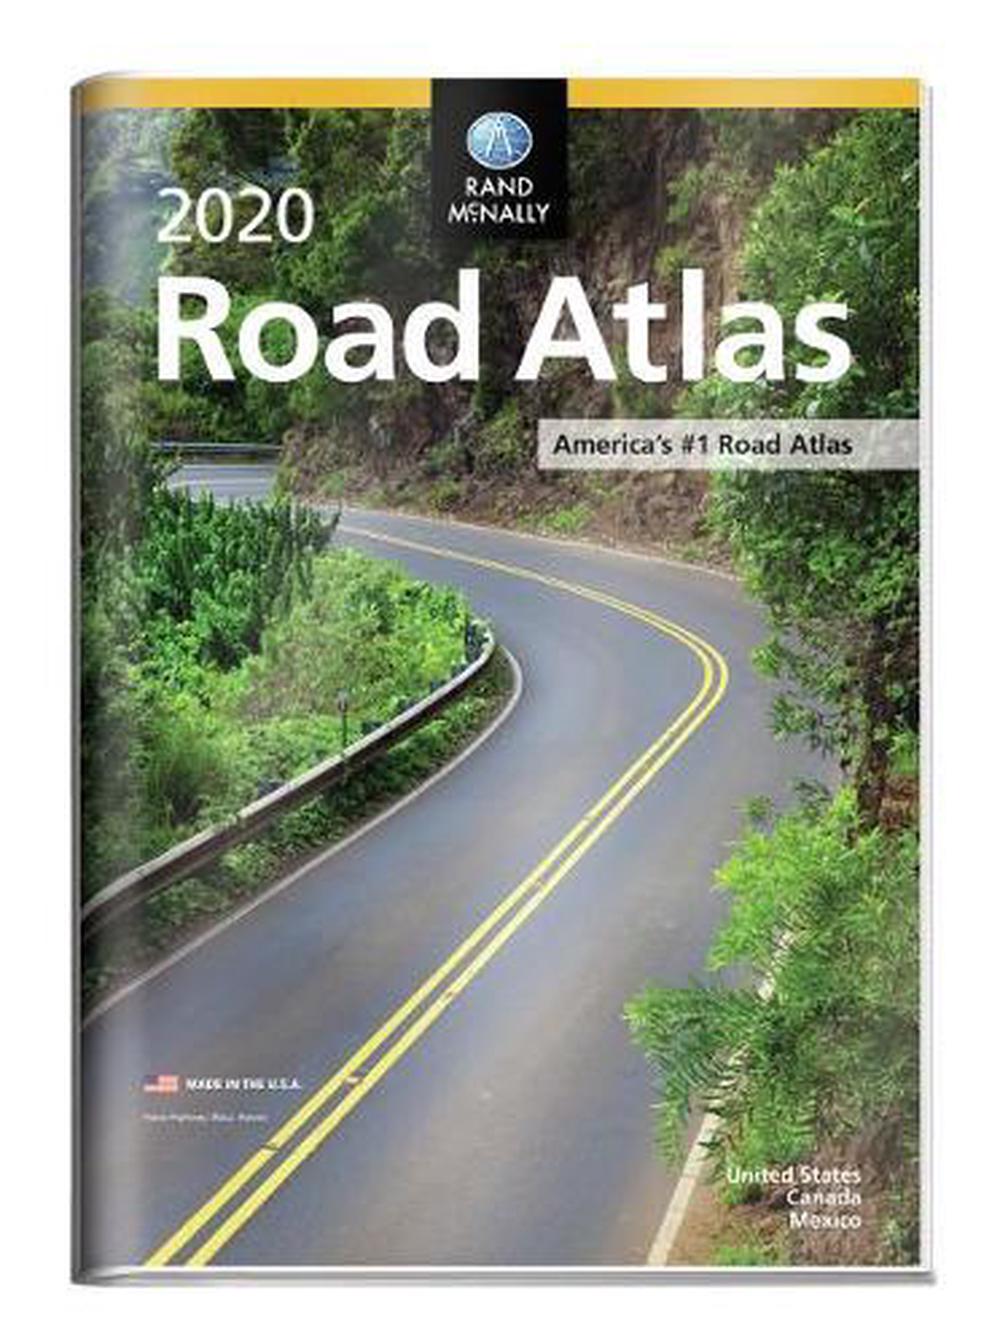 Rand McNally 2020 Road Atlas W/ Vinyl Protective Cover by Rand McNally